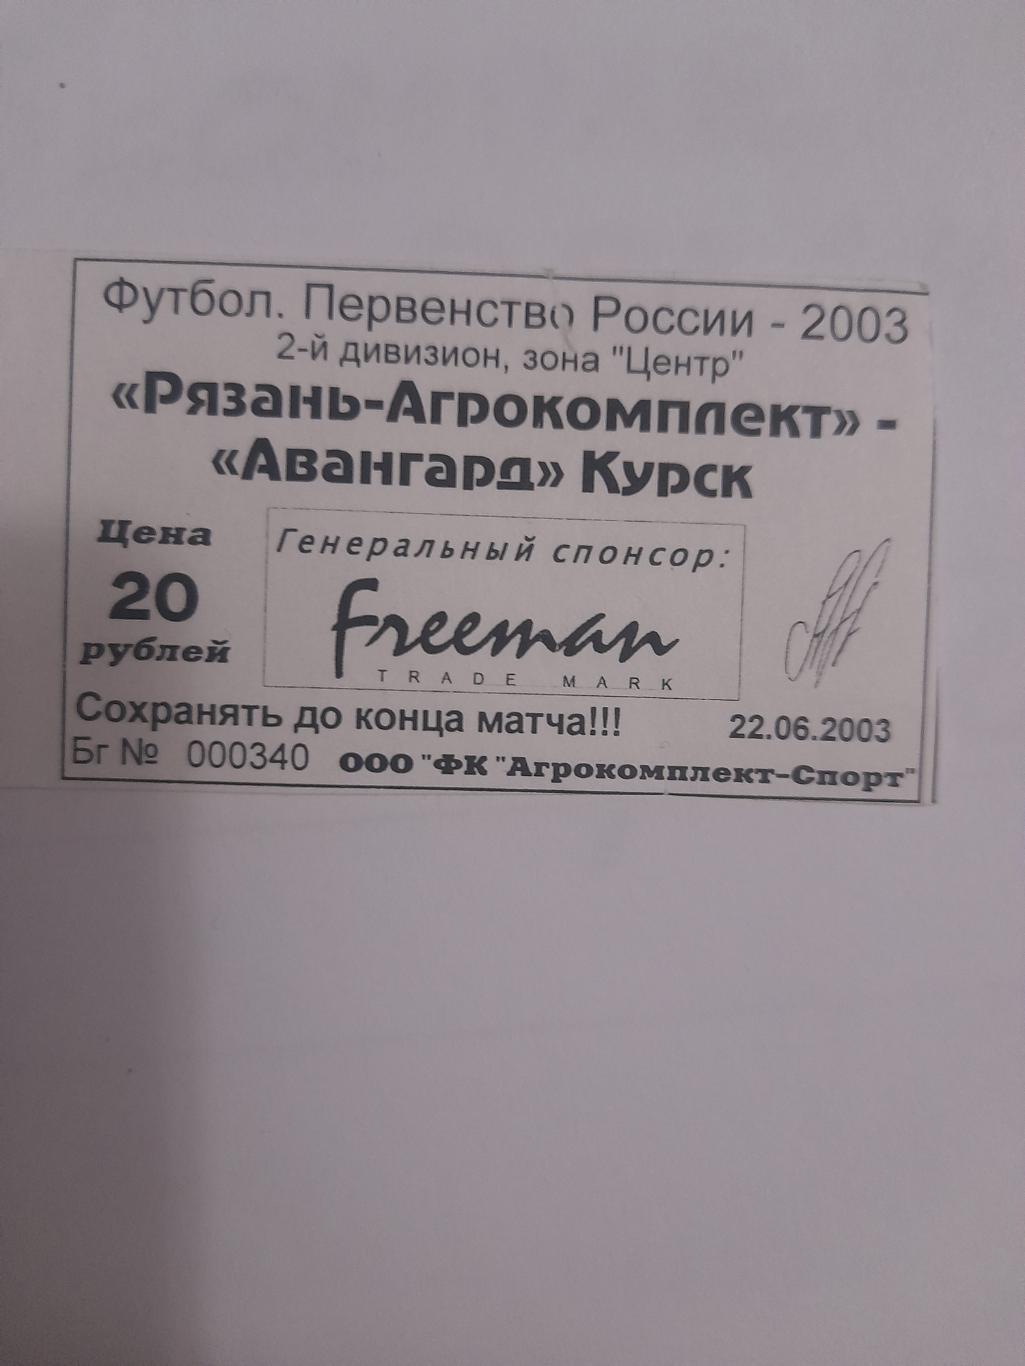 Рязань - Курск 2003 билет